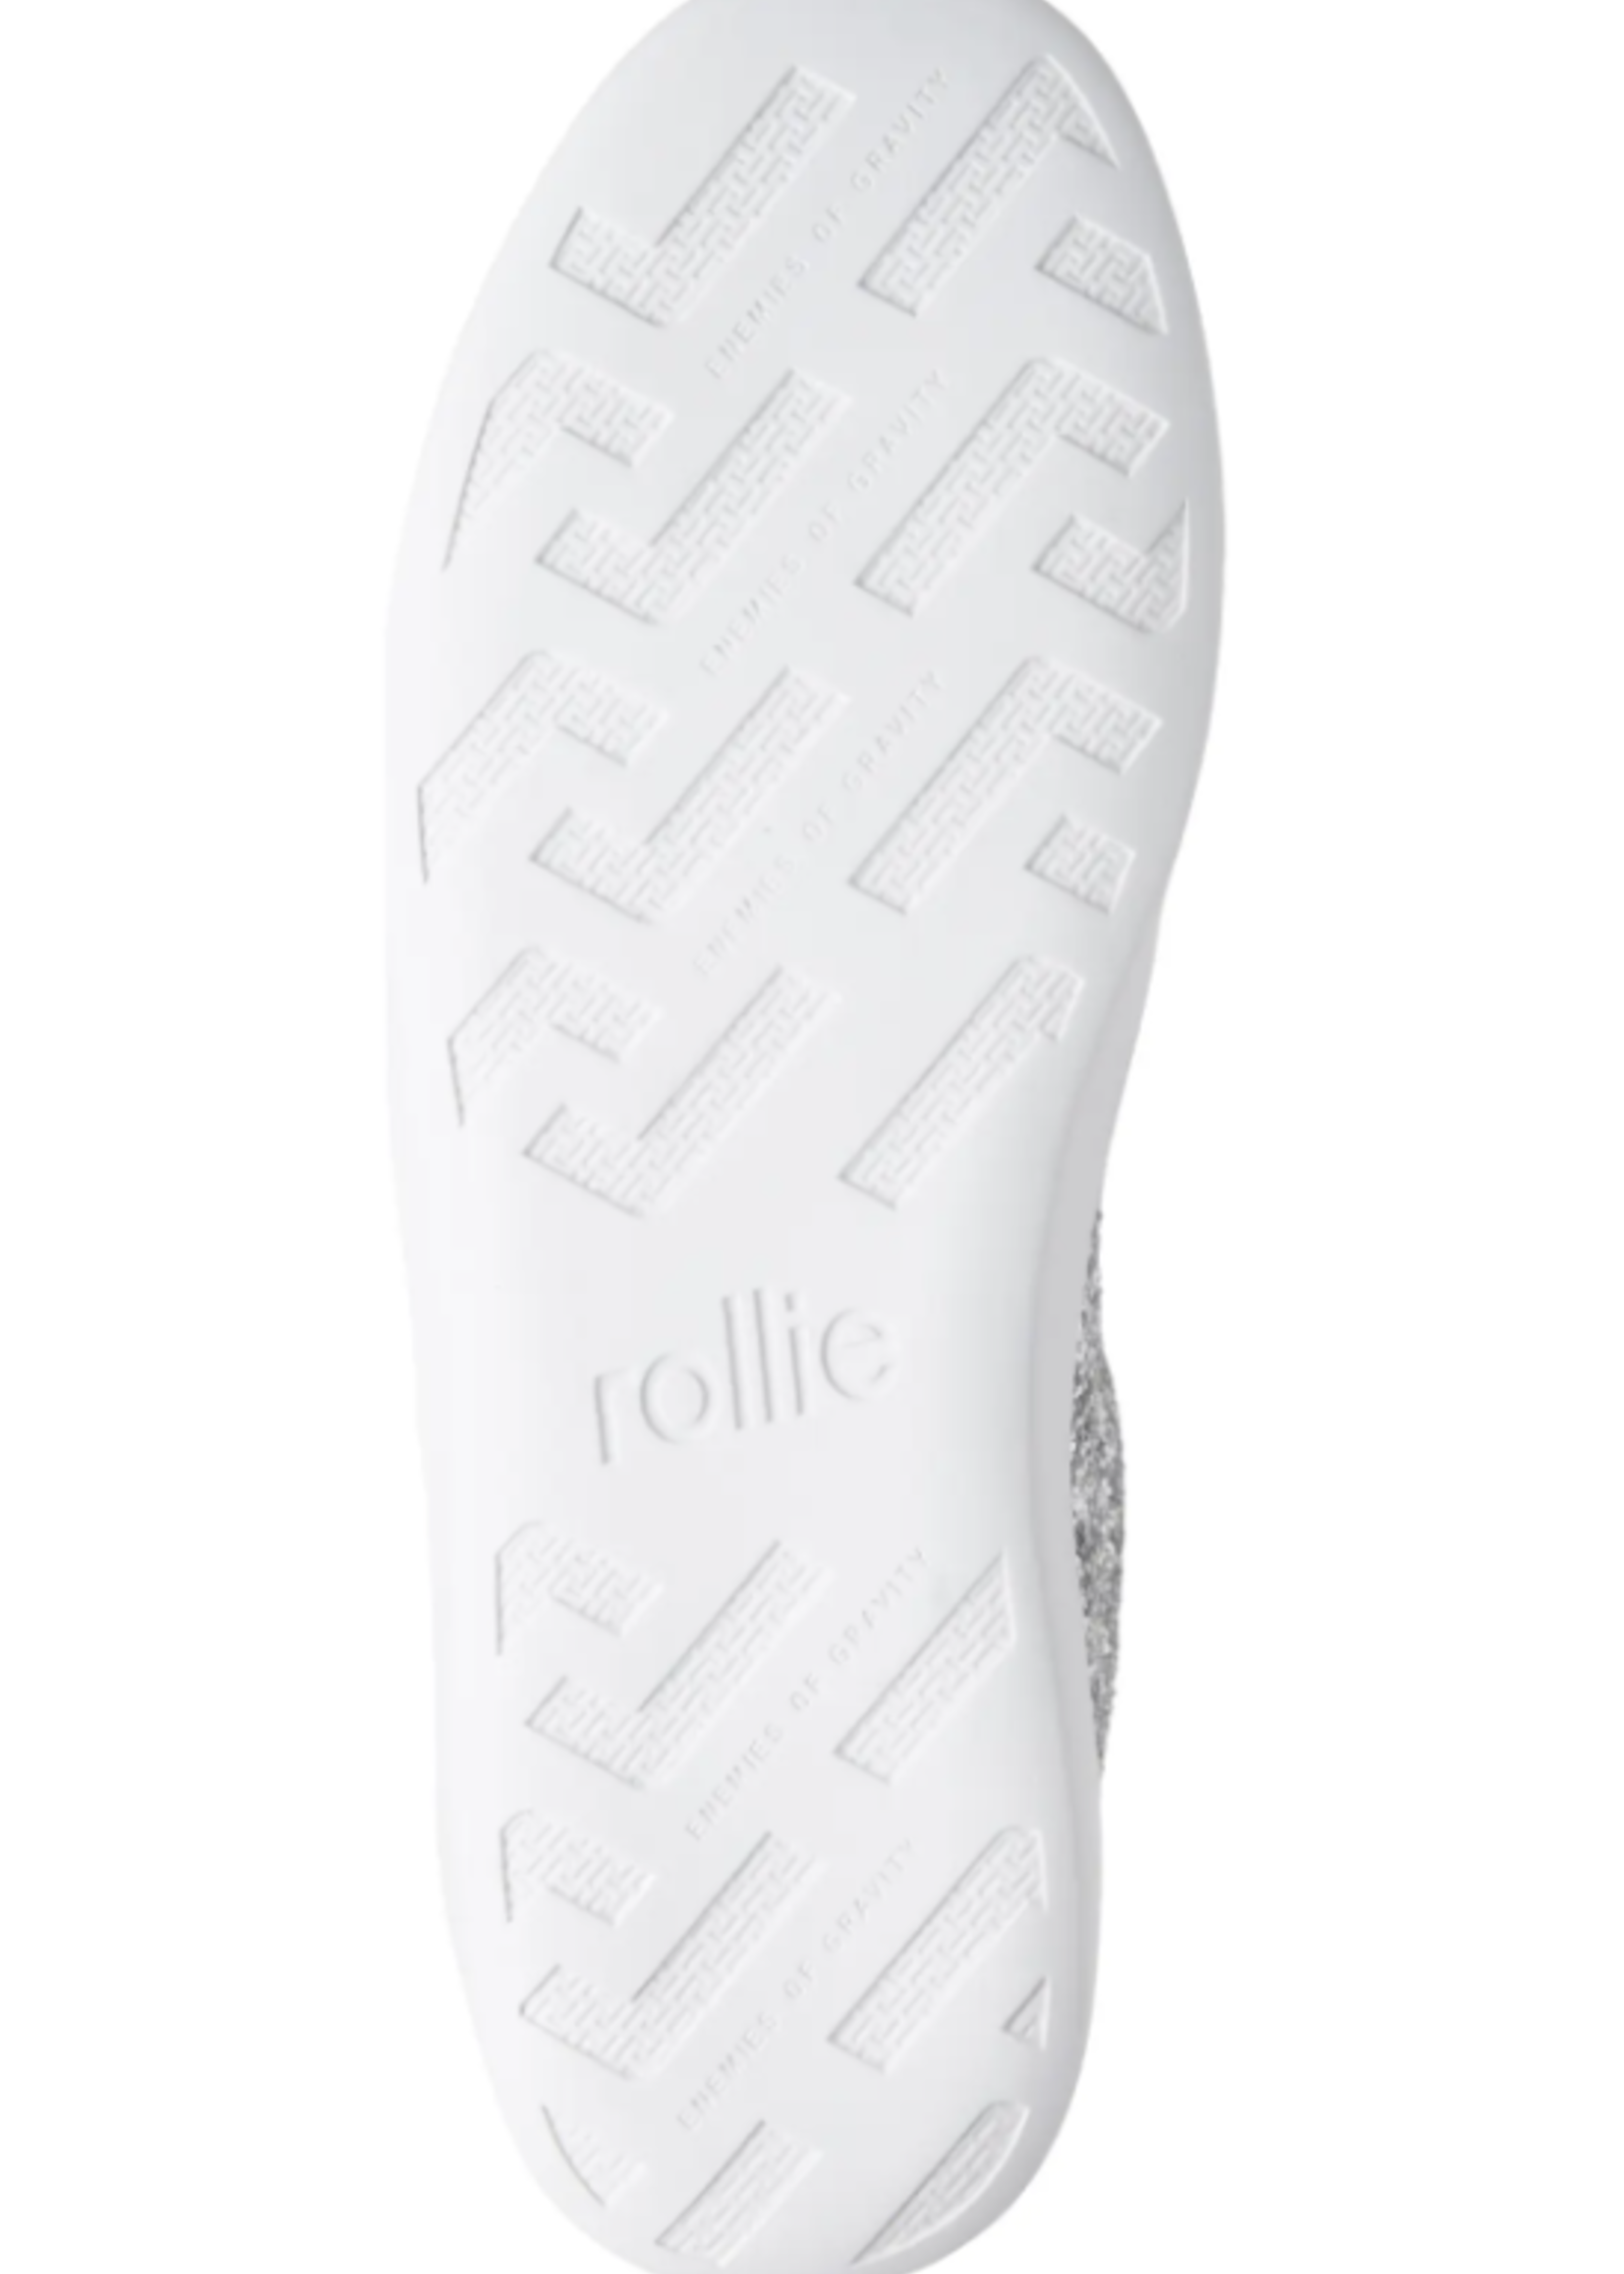 Rollie Prime 54 Sneaker